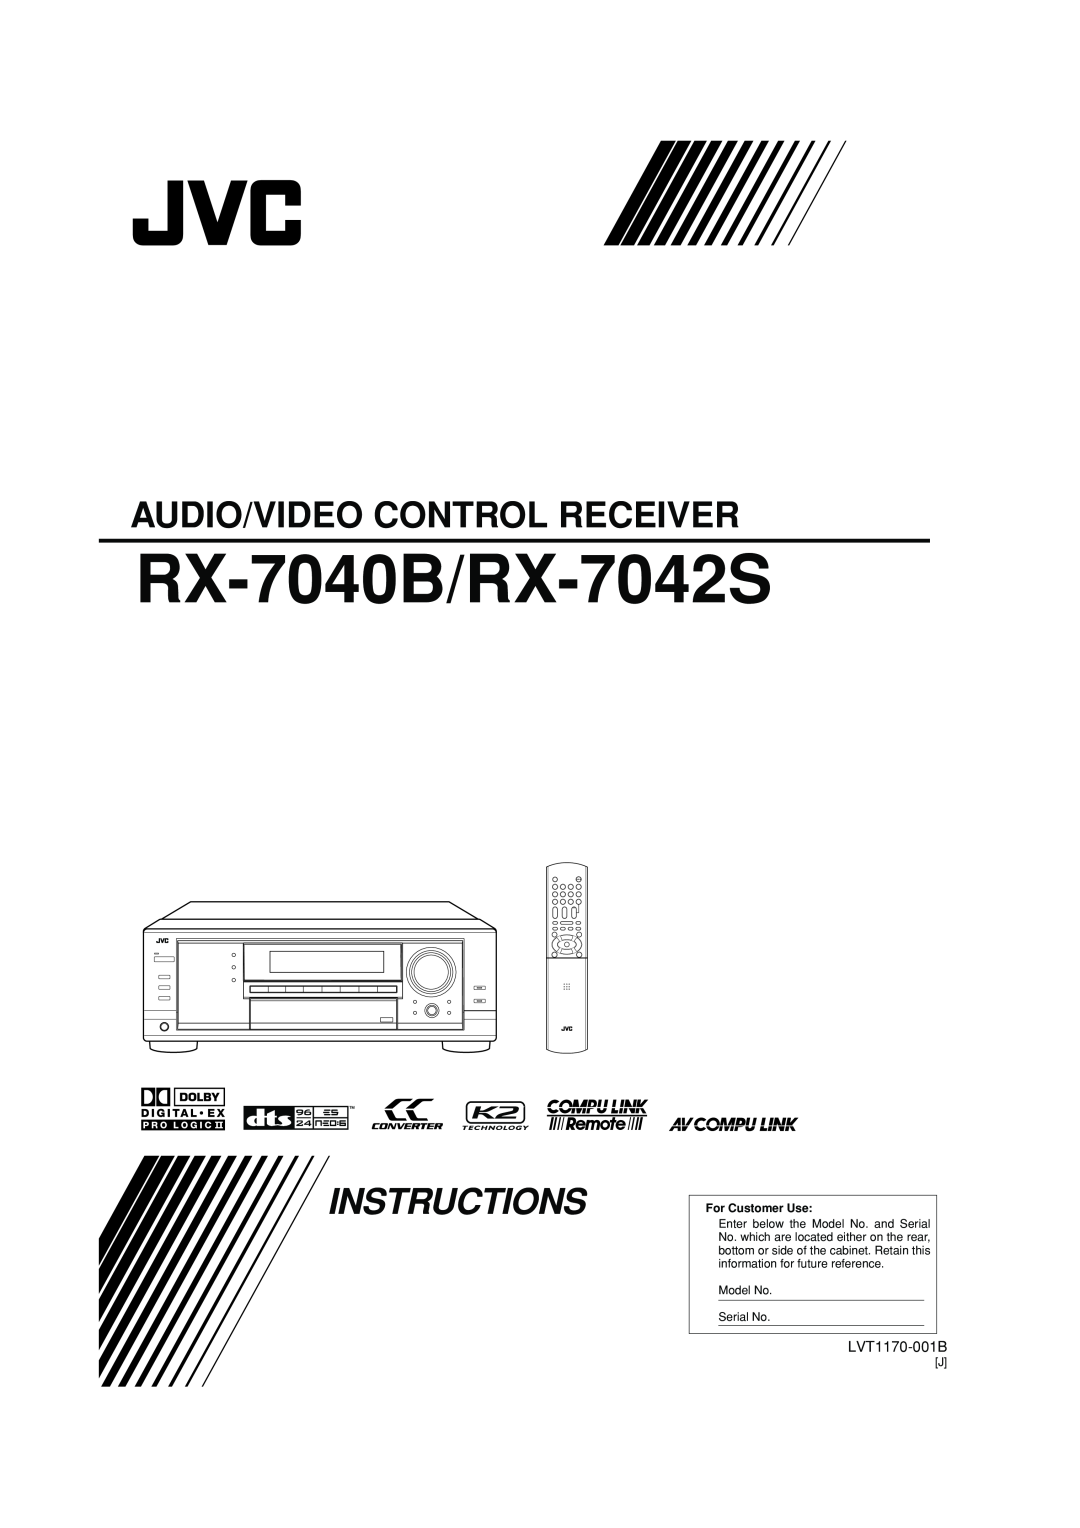 JVC manual RX-7040B/RX-7042S, Audio/Video Control Receiver, Instructions, LVT1170-001B 